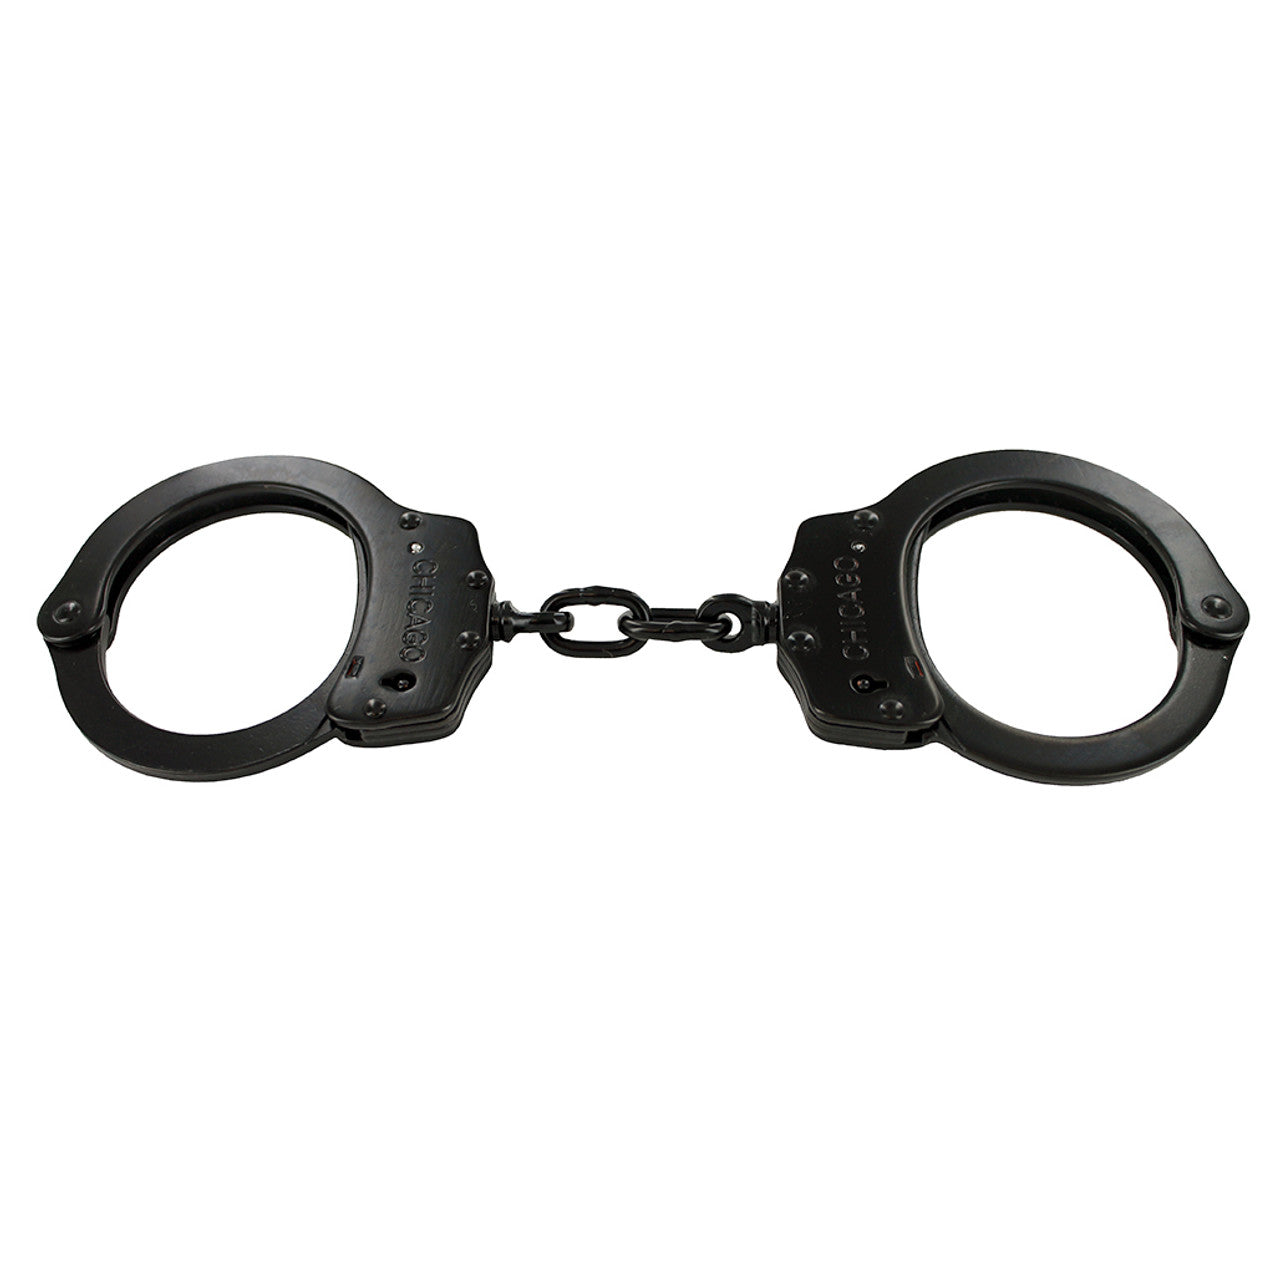 Chicago Double-Locking Handcuffs in Black